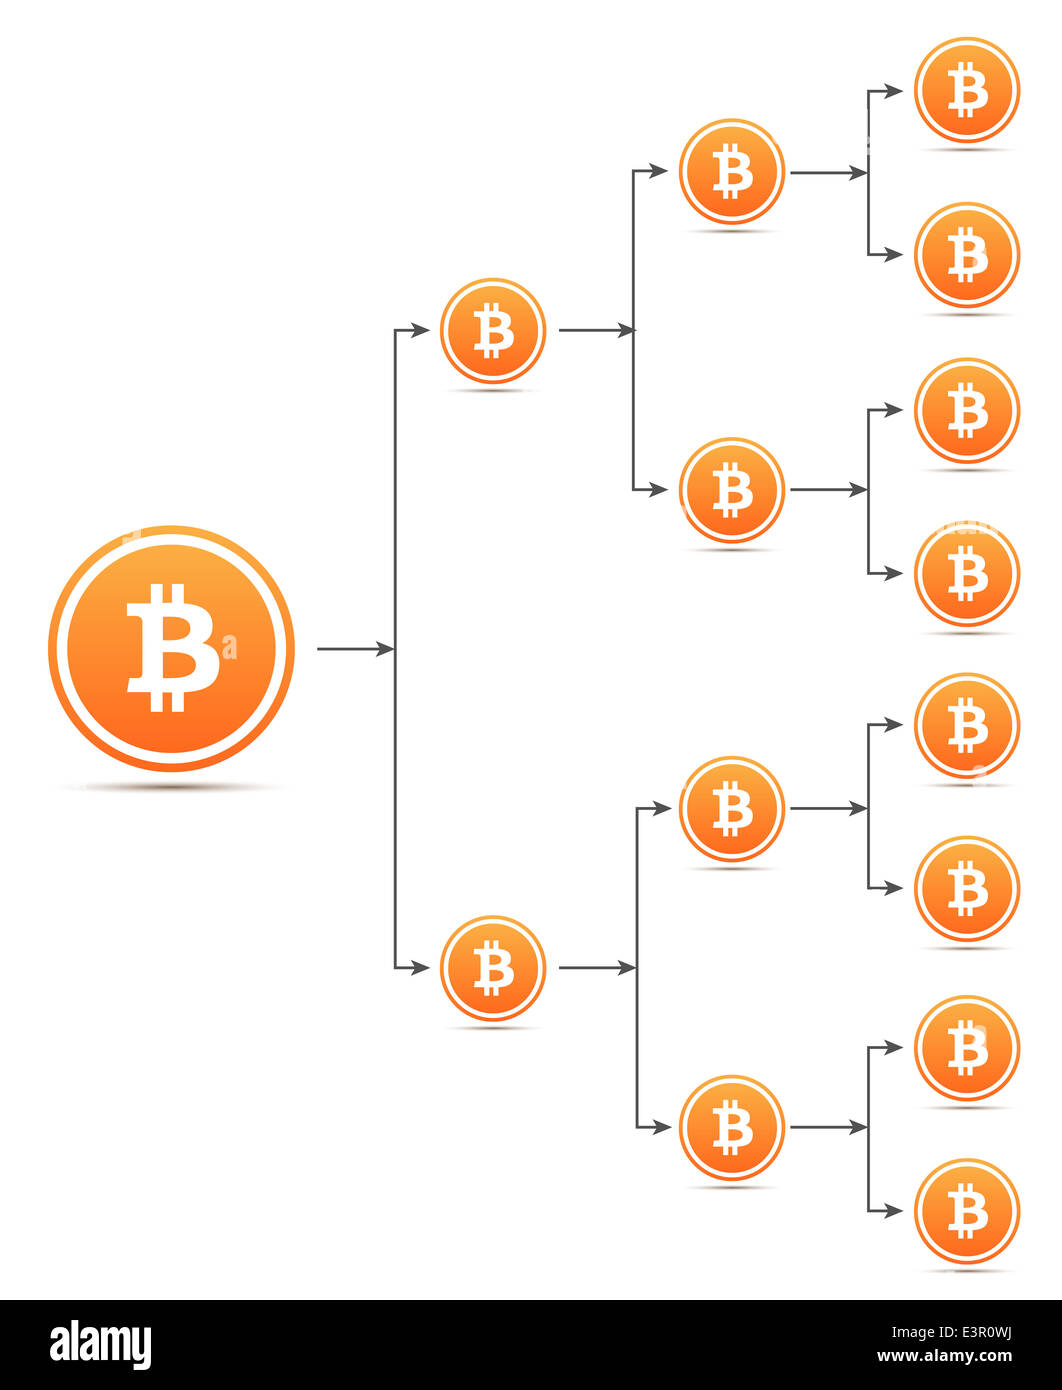 Organization tree chart illustration with Bitcoin icon, shadow on white background. Stock Photo